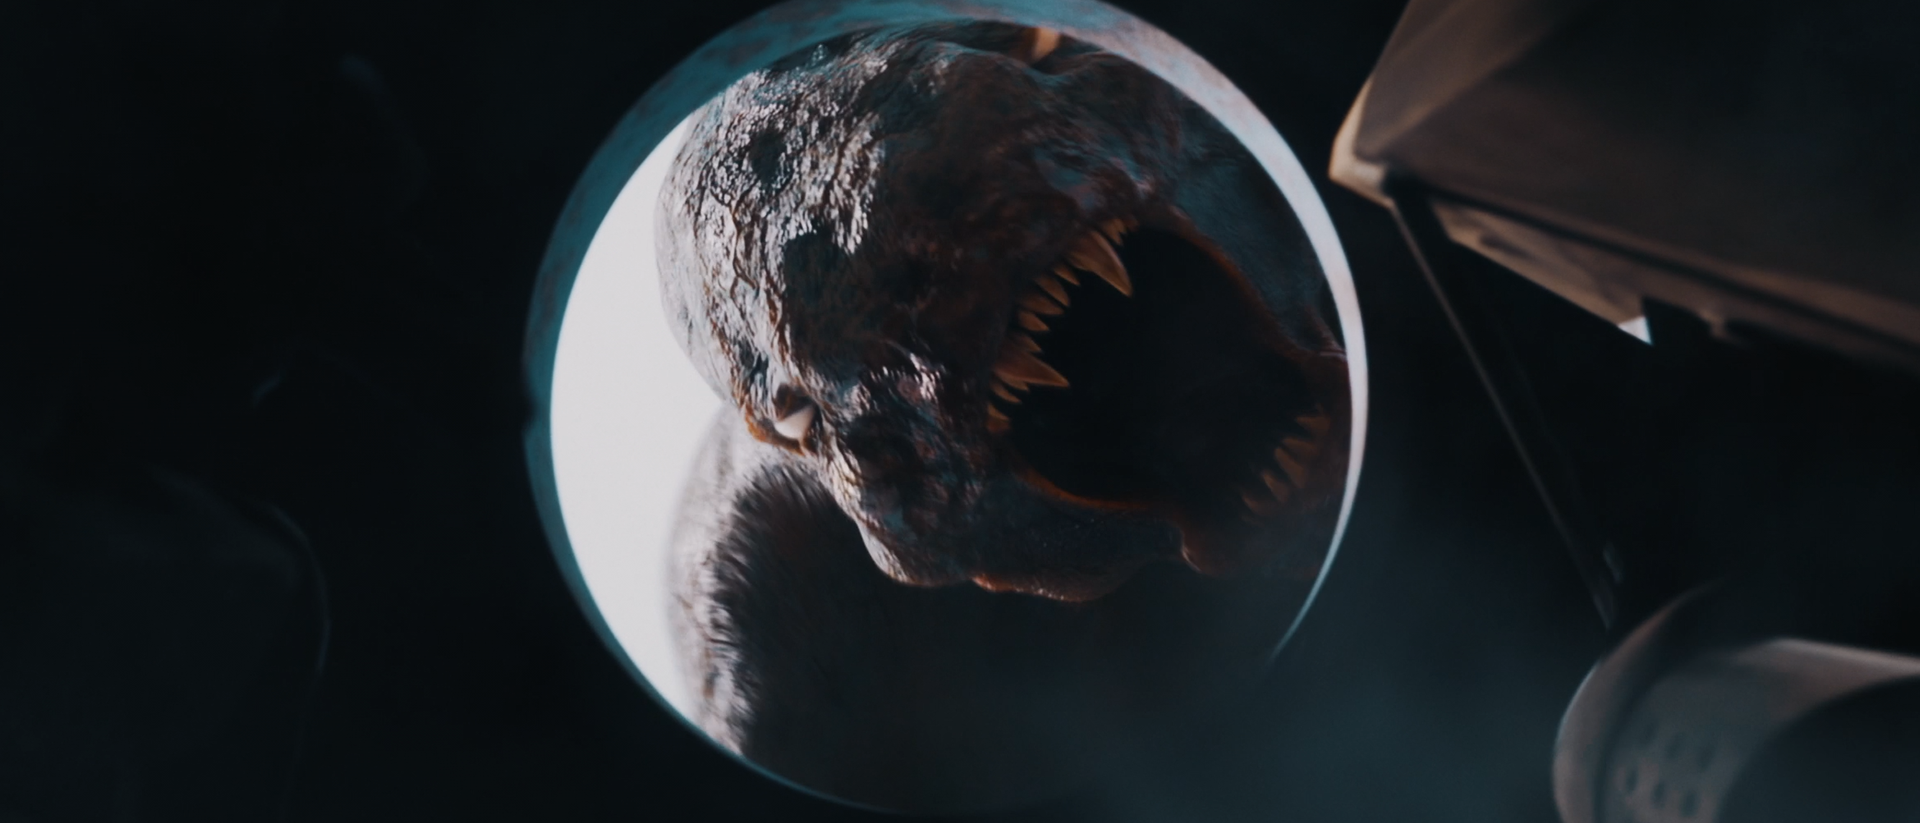 Epic Monster VFX Breakdown | ActionVFX Featured Studio: All Dimensions